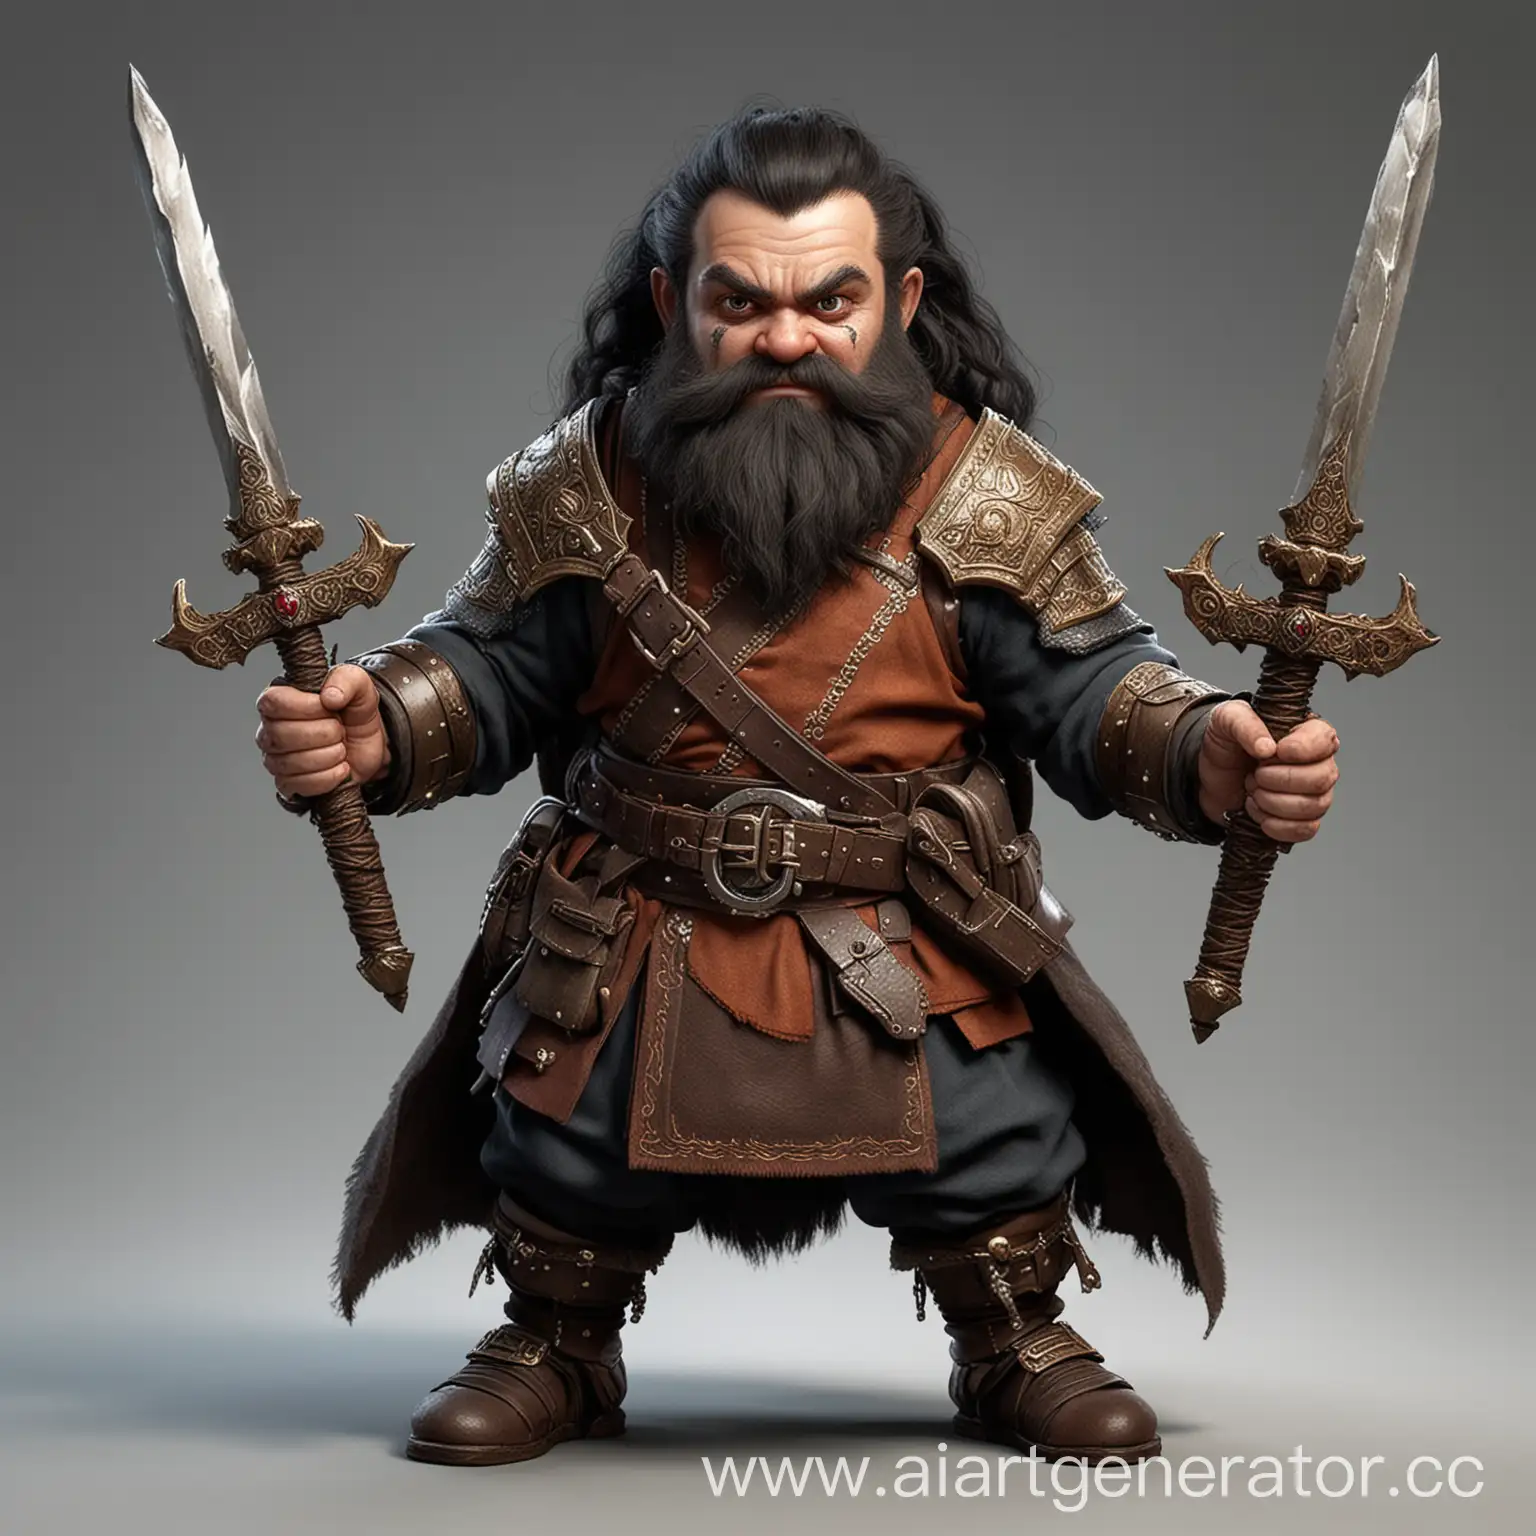 Dwarf-Warrior-in-Ornate-Attire-Brandishing-Dual-Swords